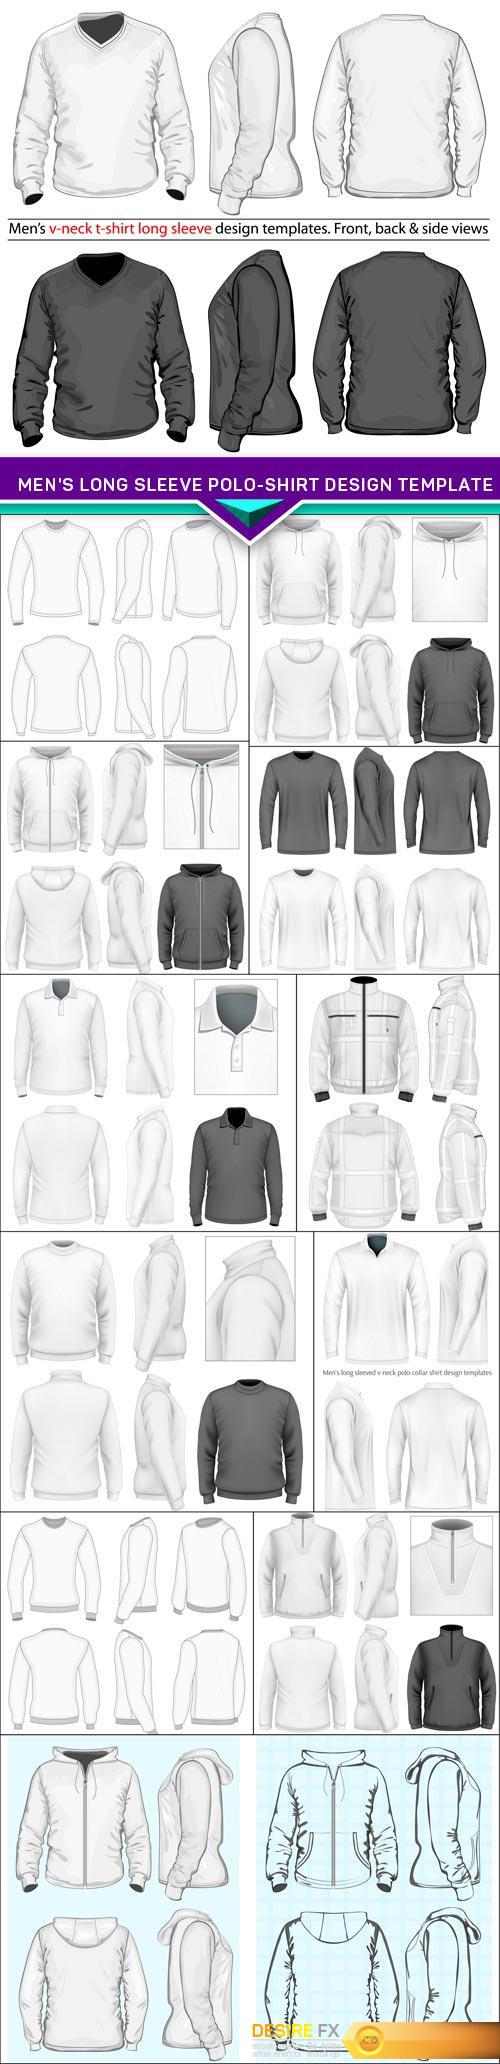 Men's long sleeve polo-shirt design template 12x EPS